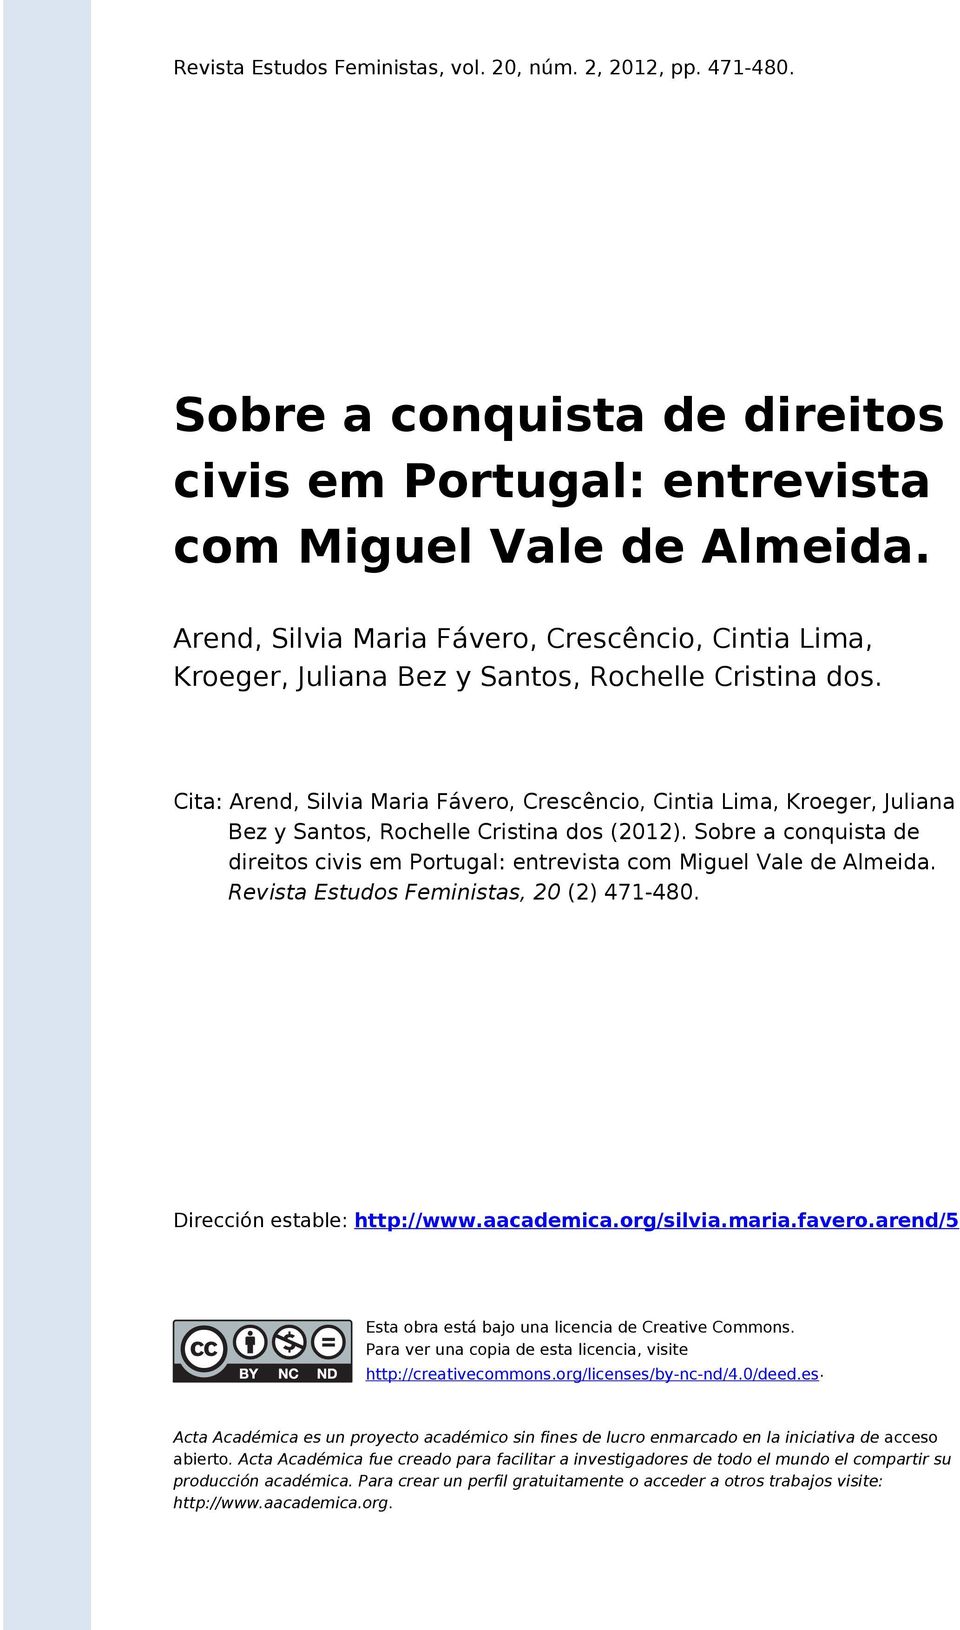 Cita: Arend, Silvia Maria Fávero, Crescêncio, Cintia Lima, Kroeger, Juliana Bez y Santos, Rochelle Cristina dos (2012).